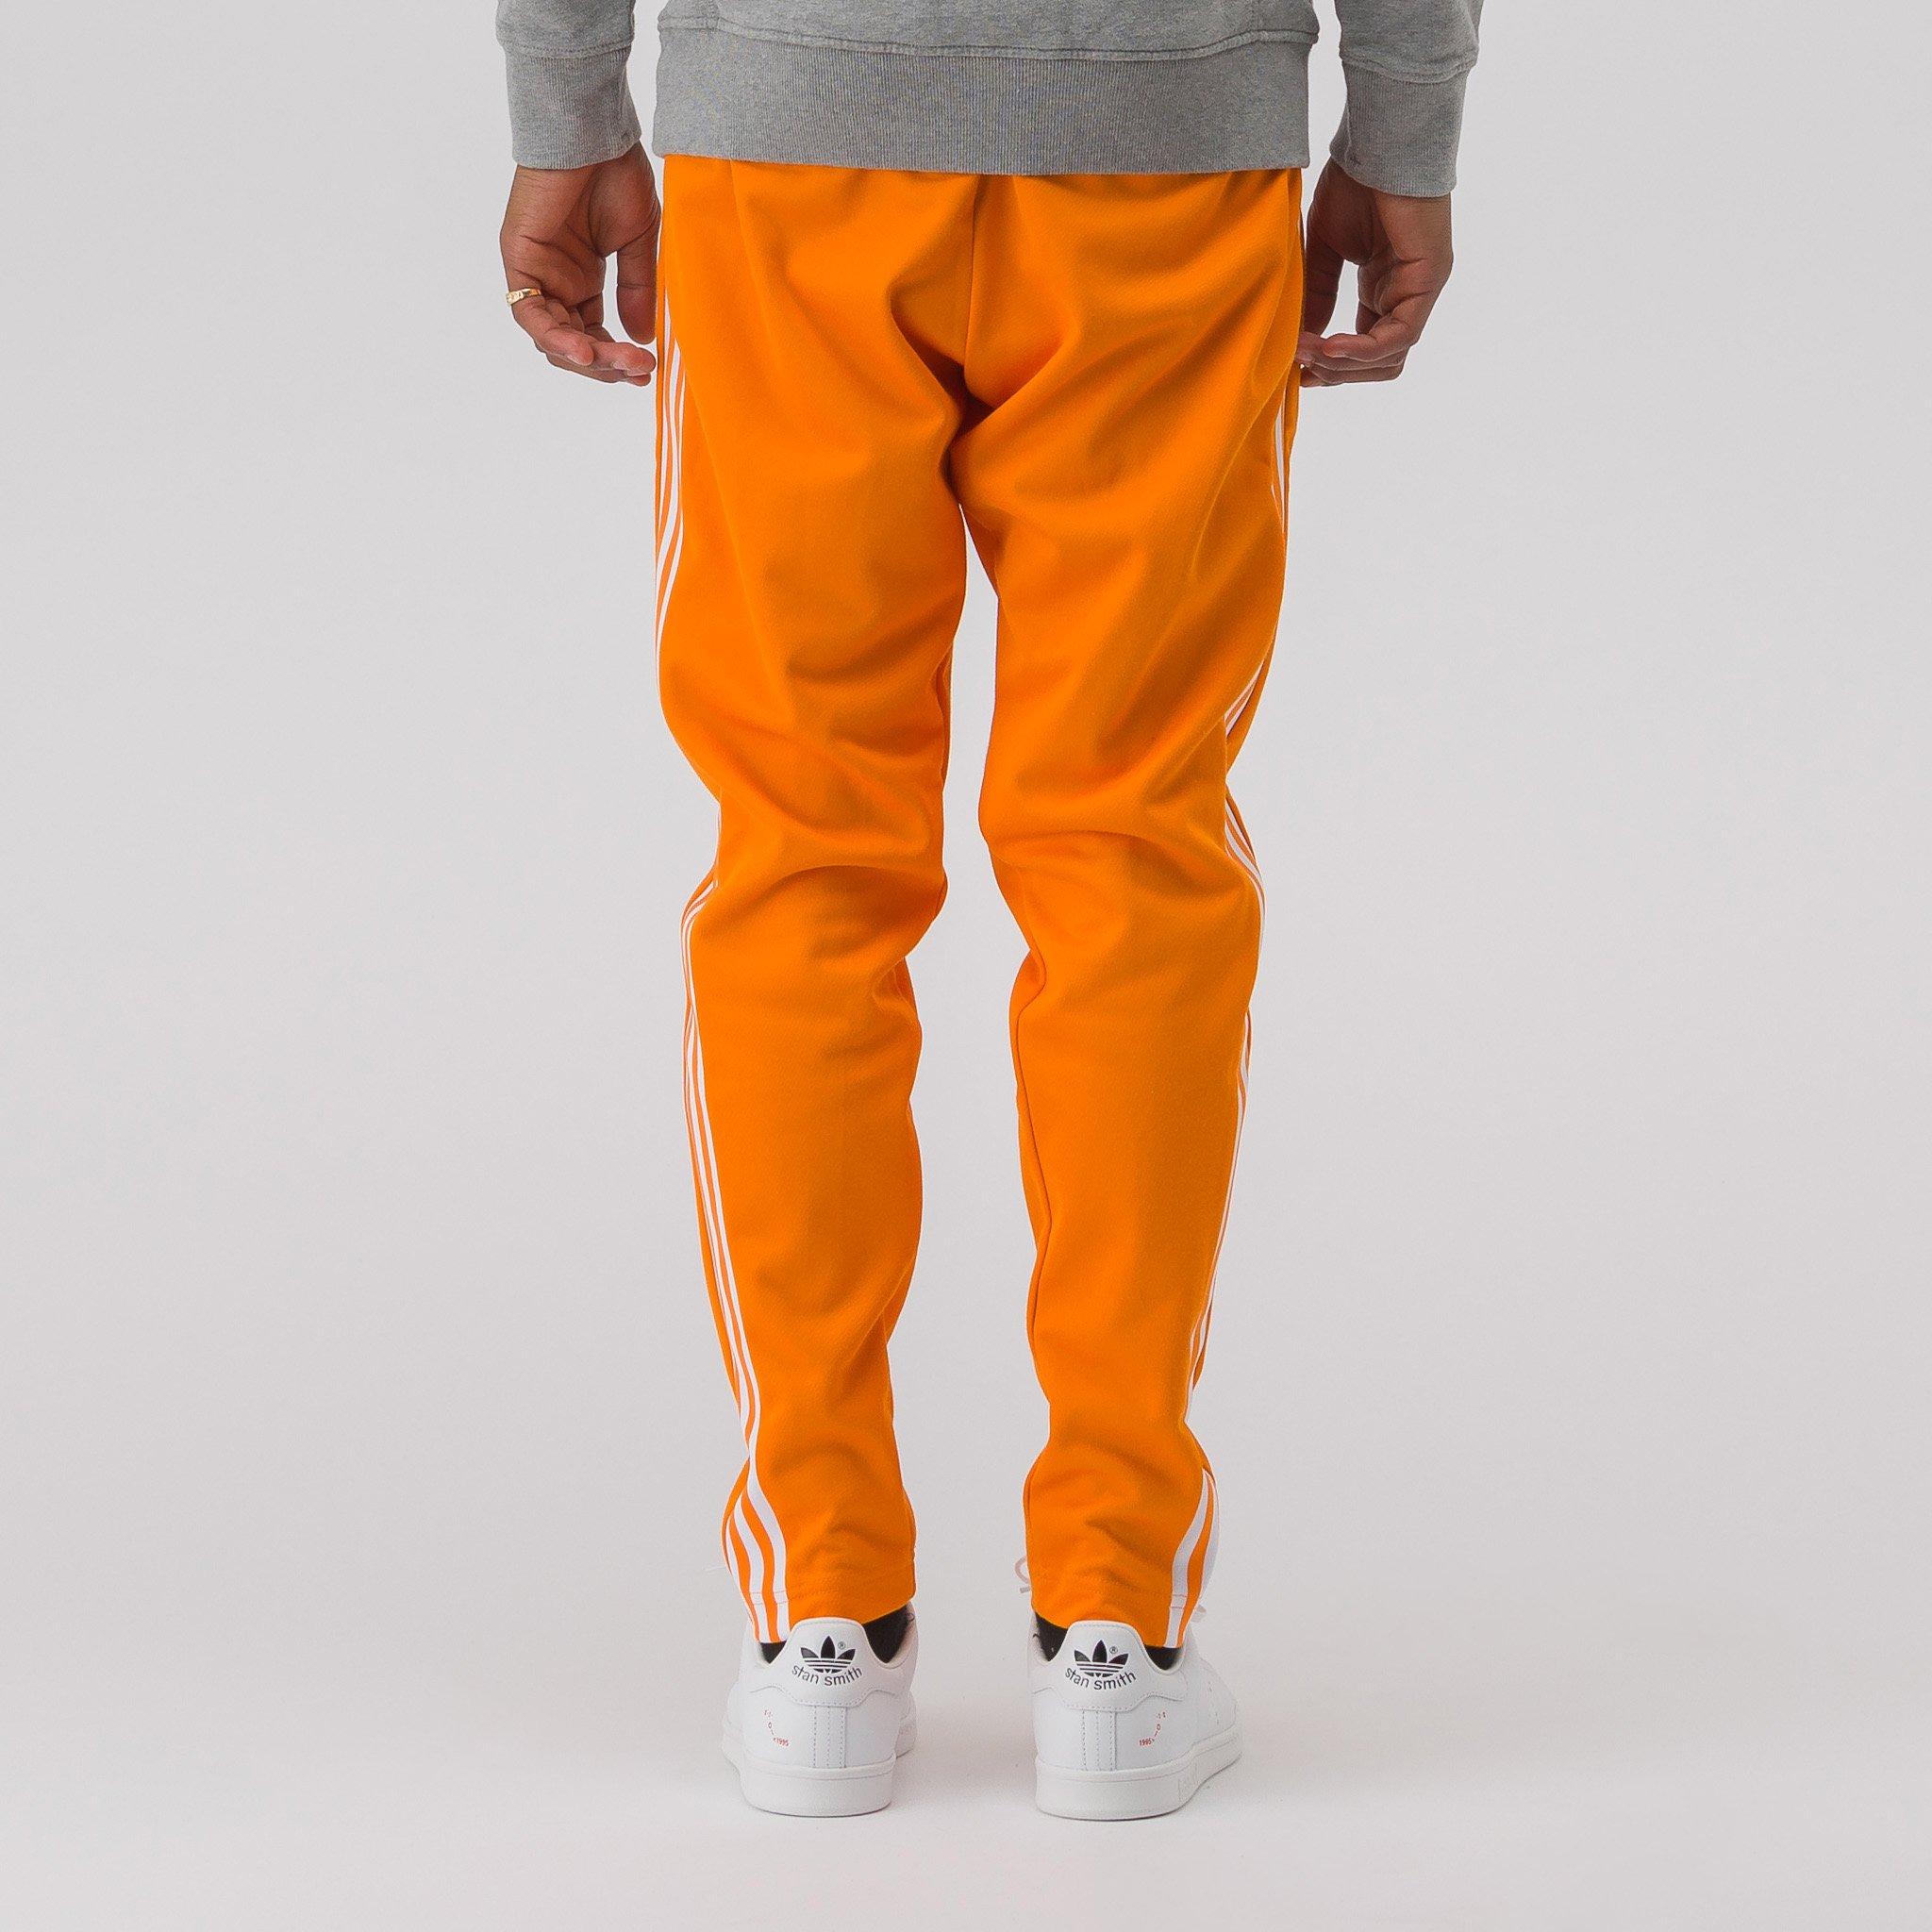 Adidas Beckenbauer Orange Pants Store, 54% OFF | www.ingeniovirtual.com